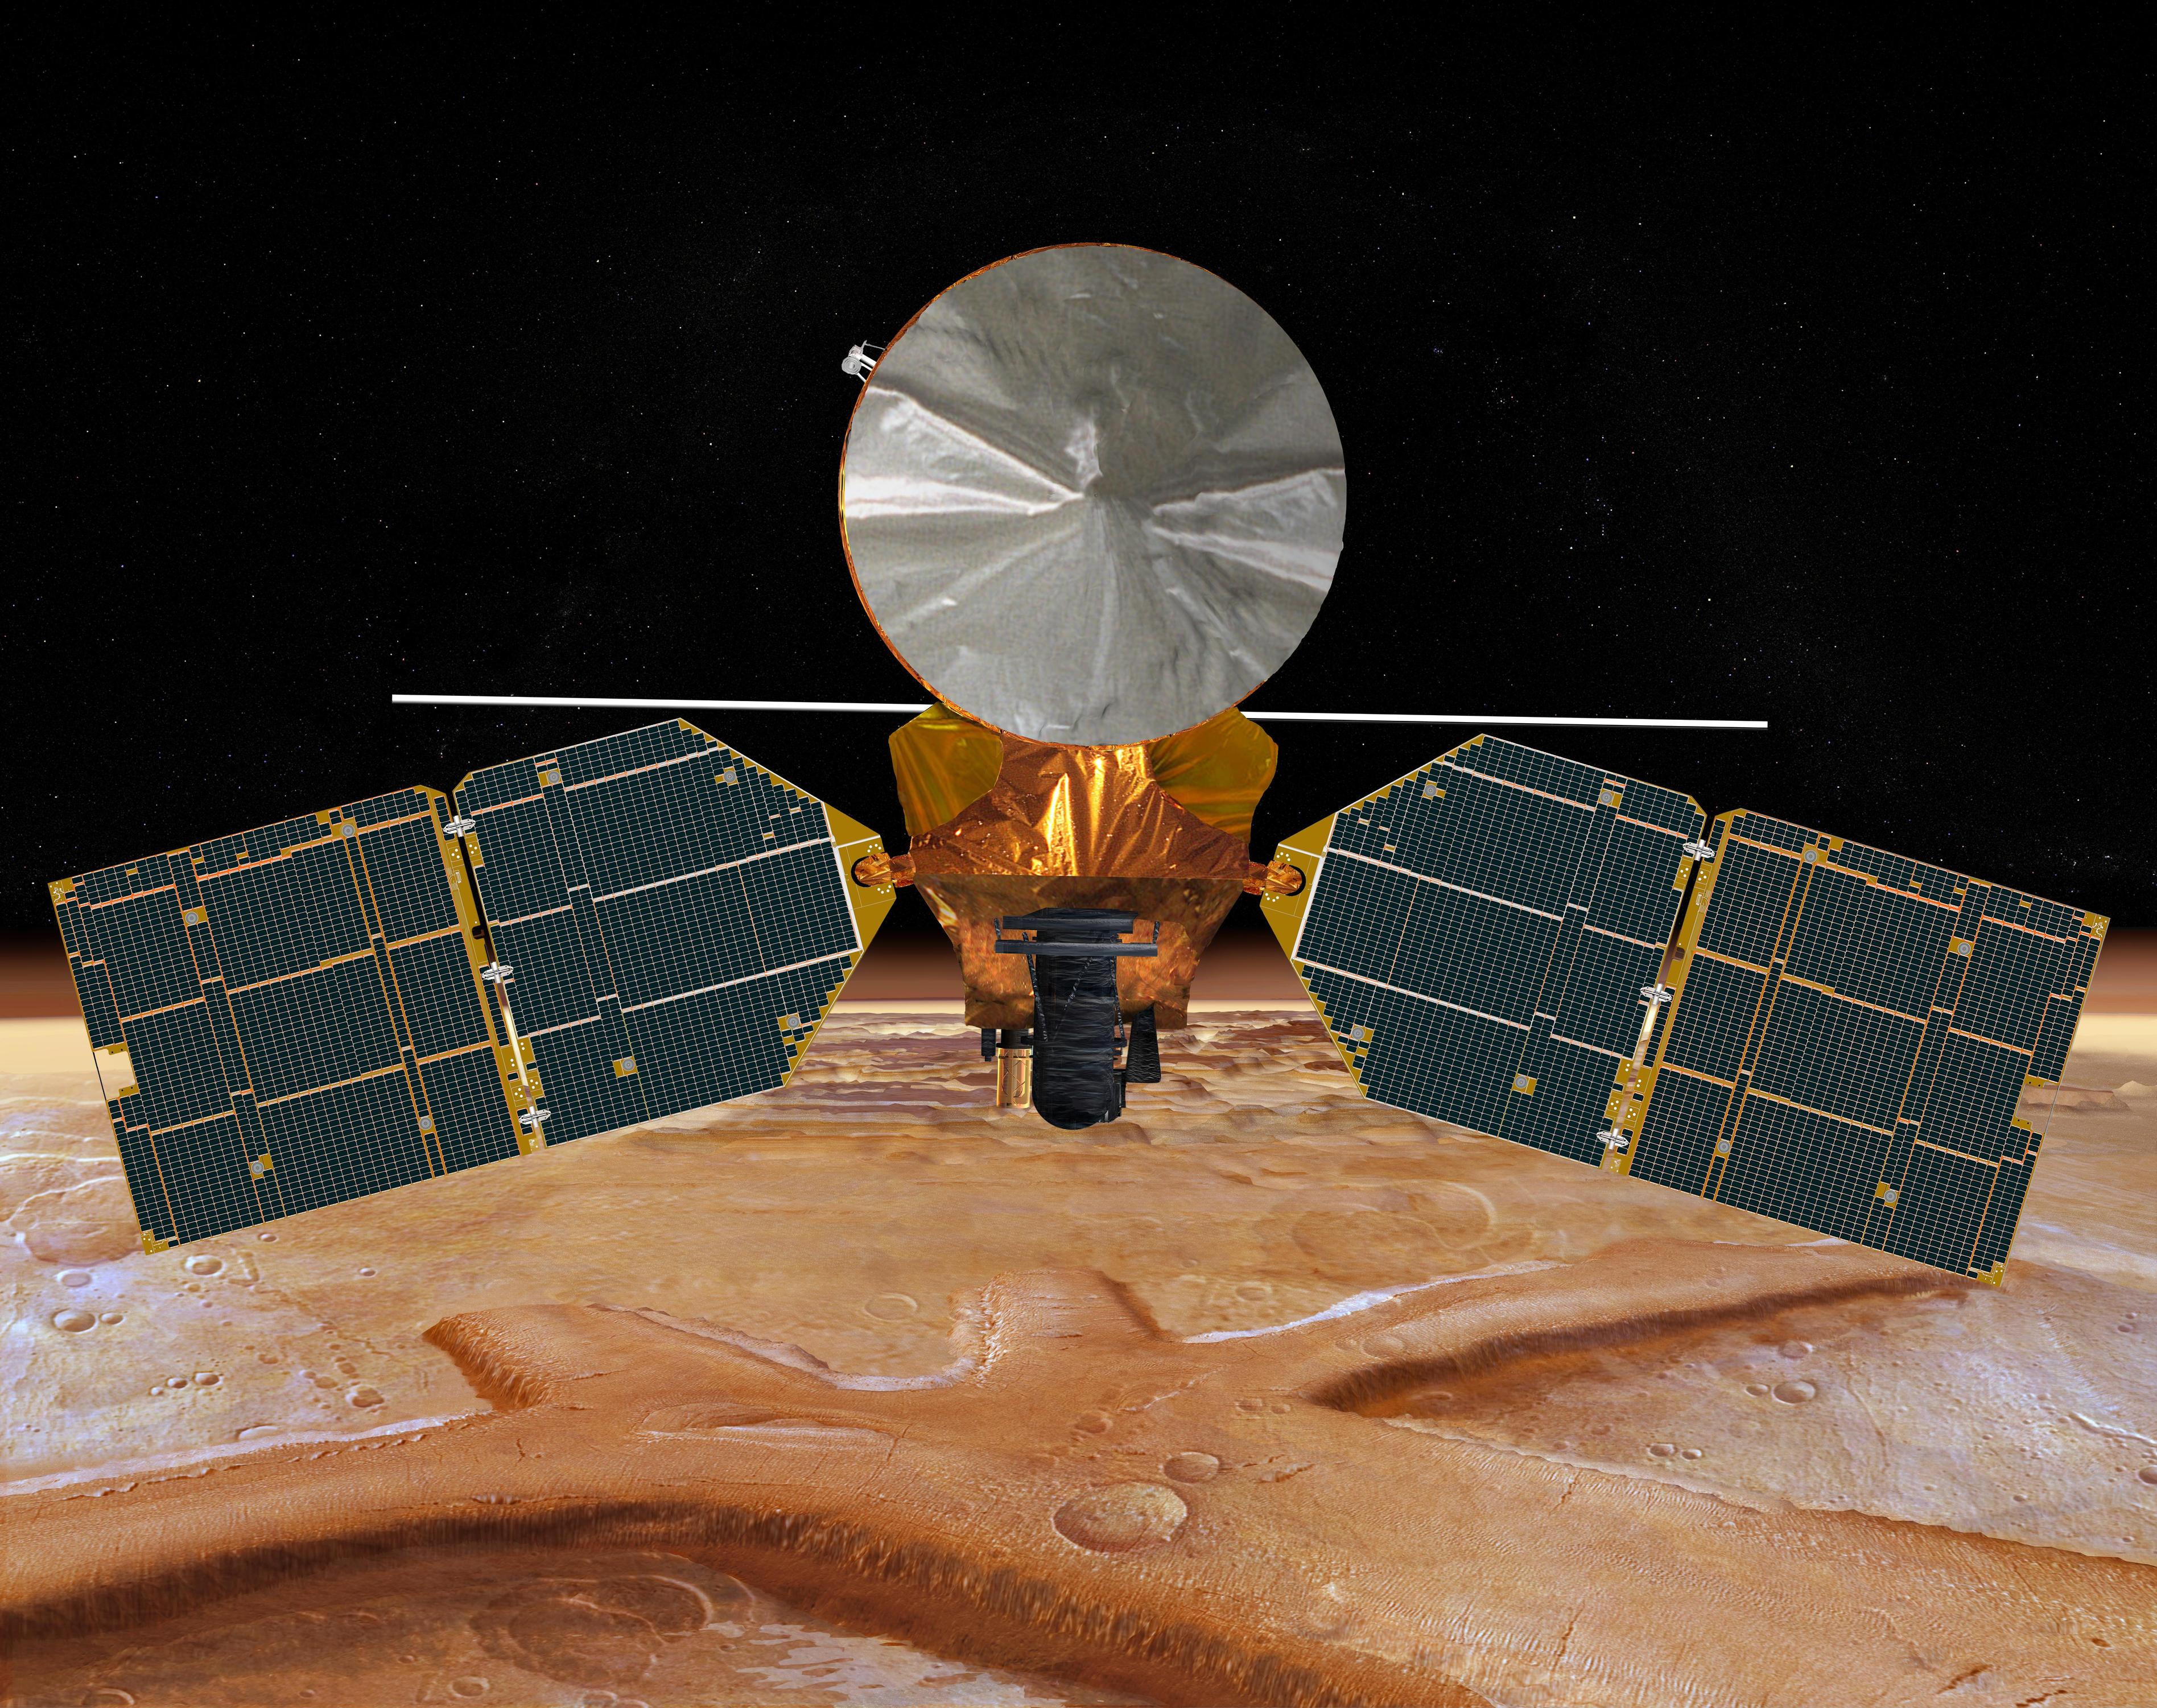  Mars Reconnaissance Orbiter, Front View (Artist's Concept)